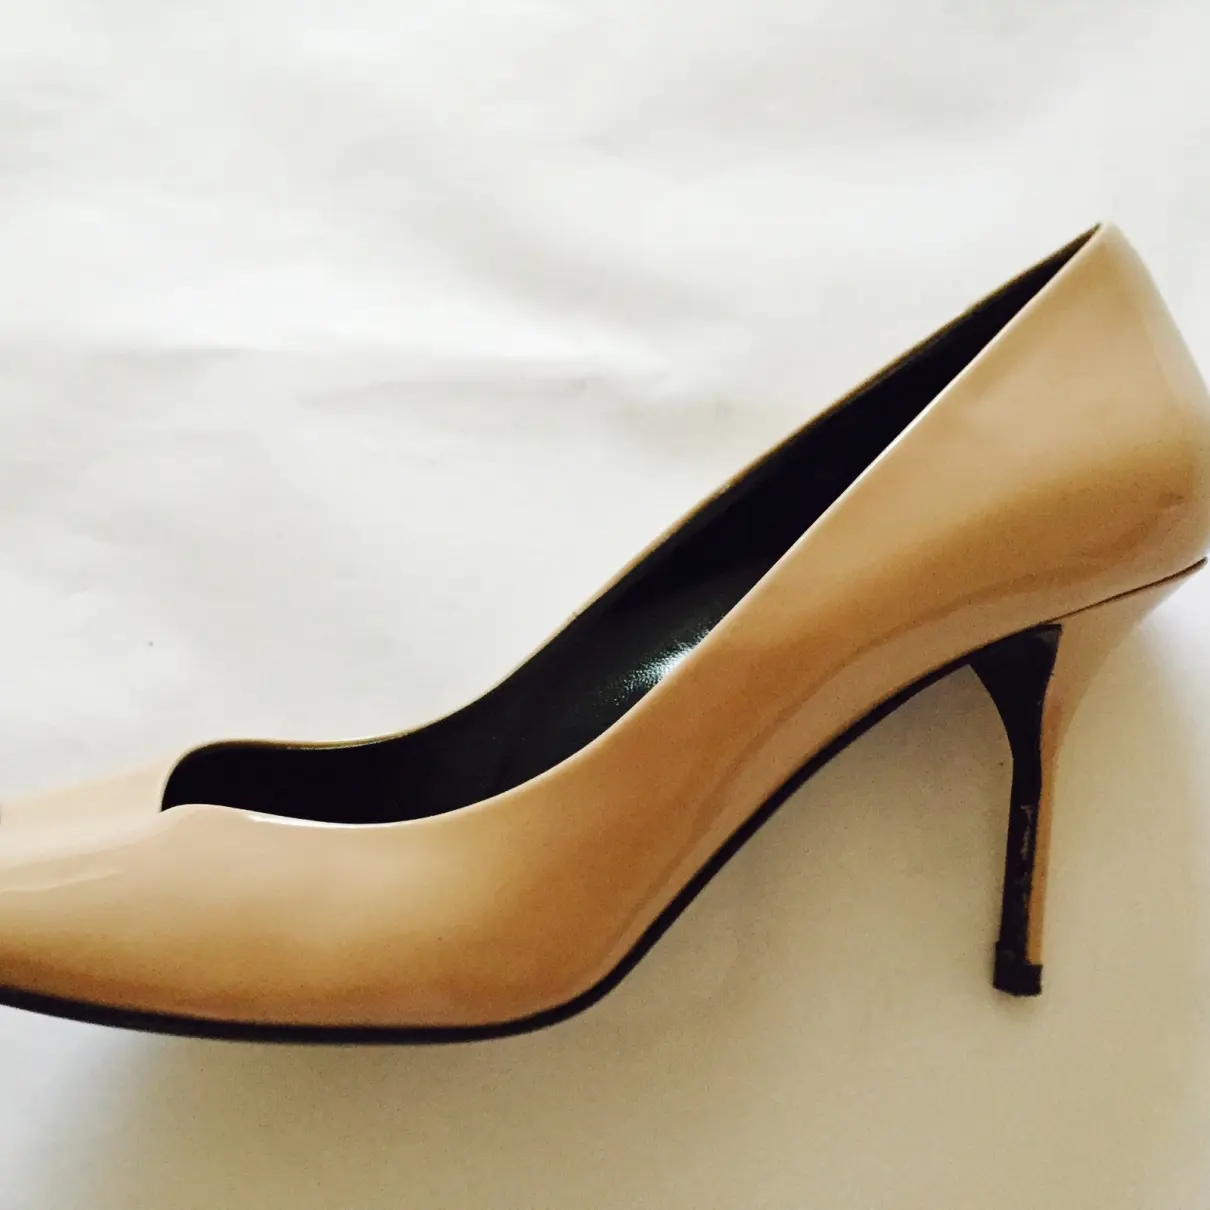 Buy Pierre Hardy Patent leather heels online